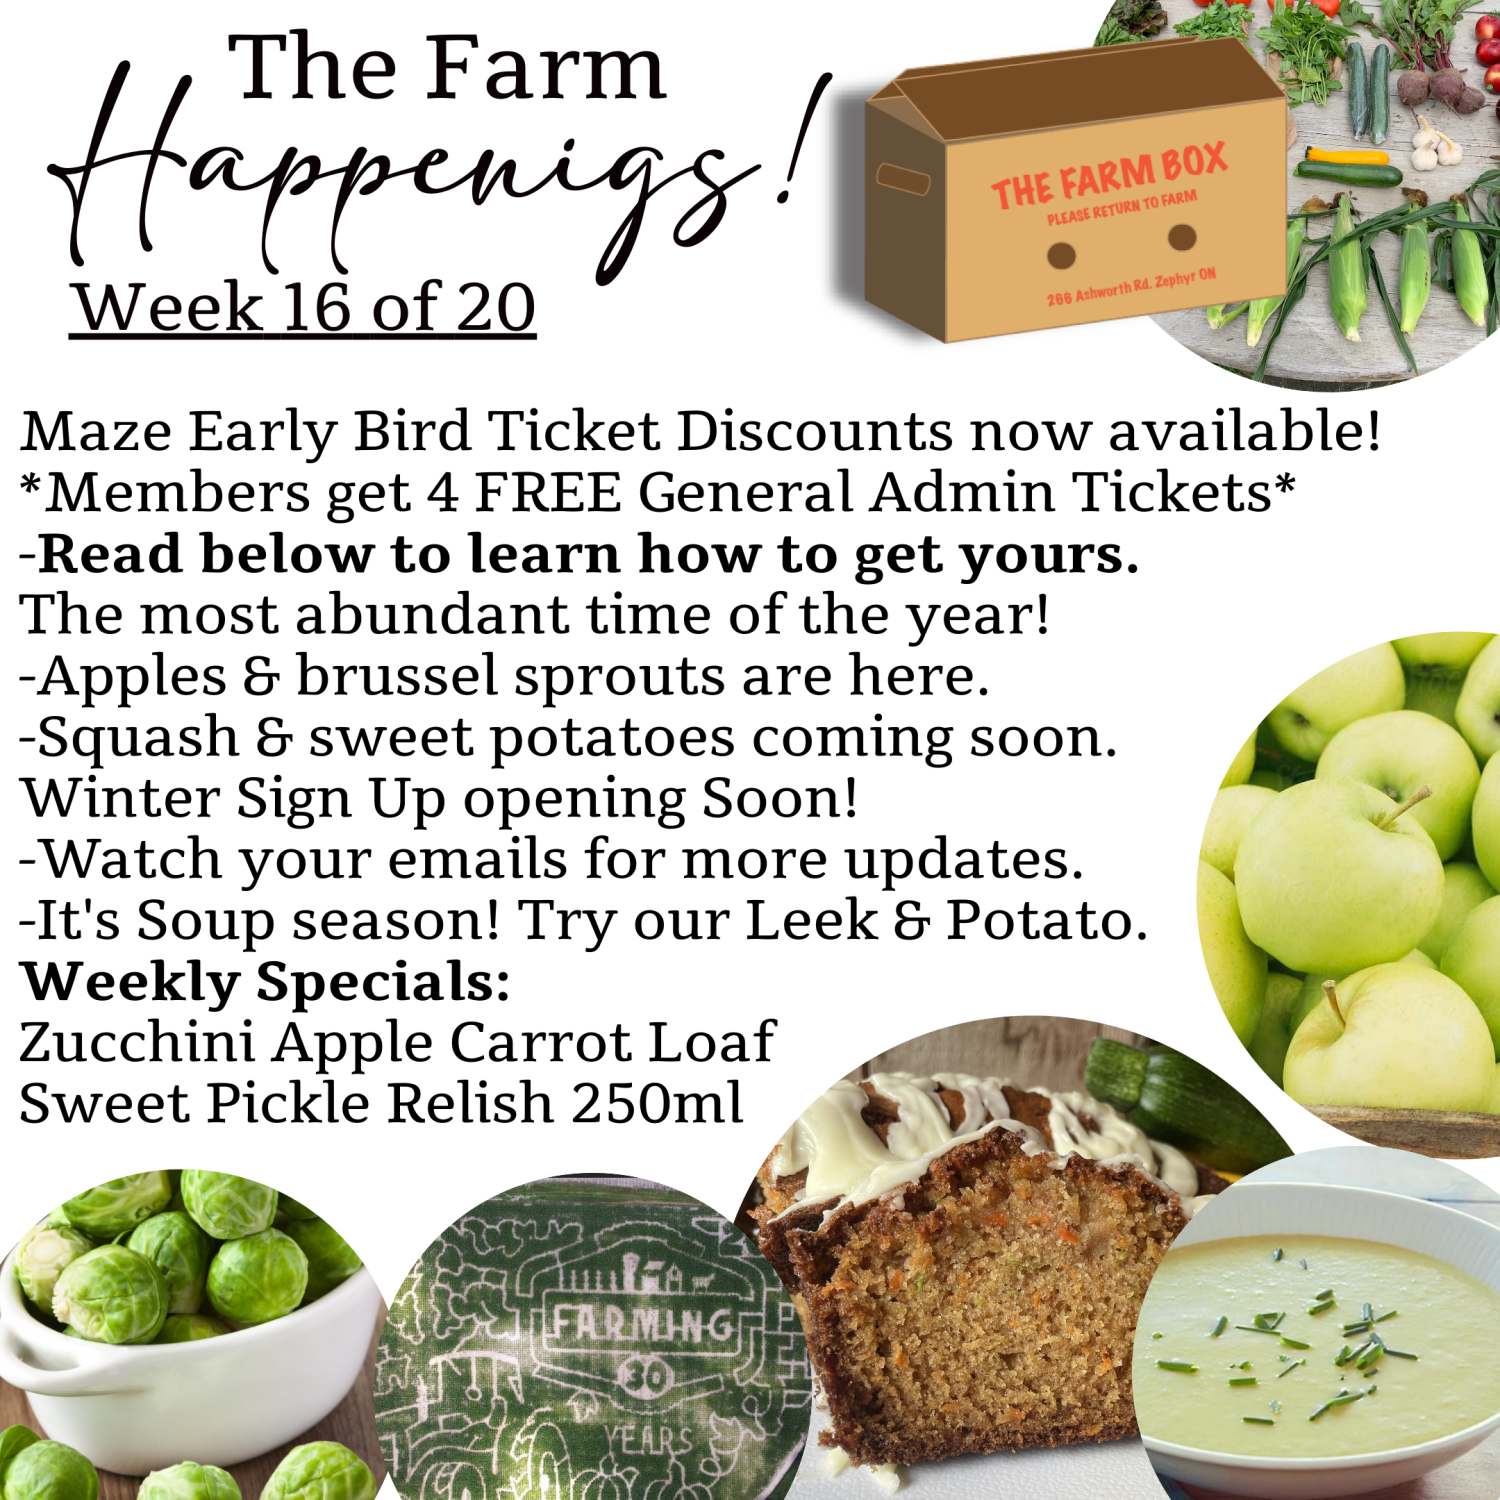 Previous Happening: "The Farm Box"-Coopers CSA Farm Farm Happenings Week 16